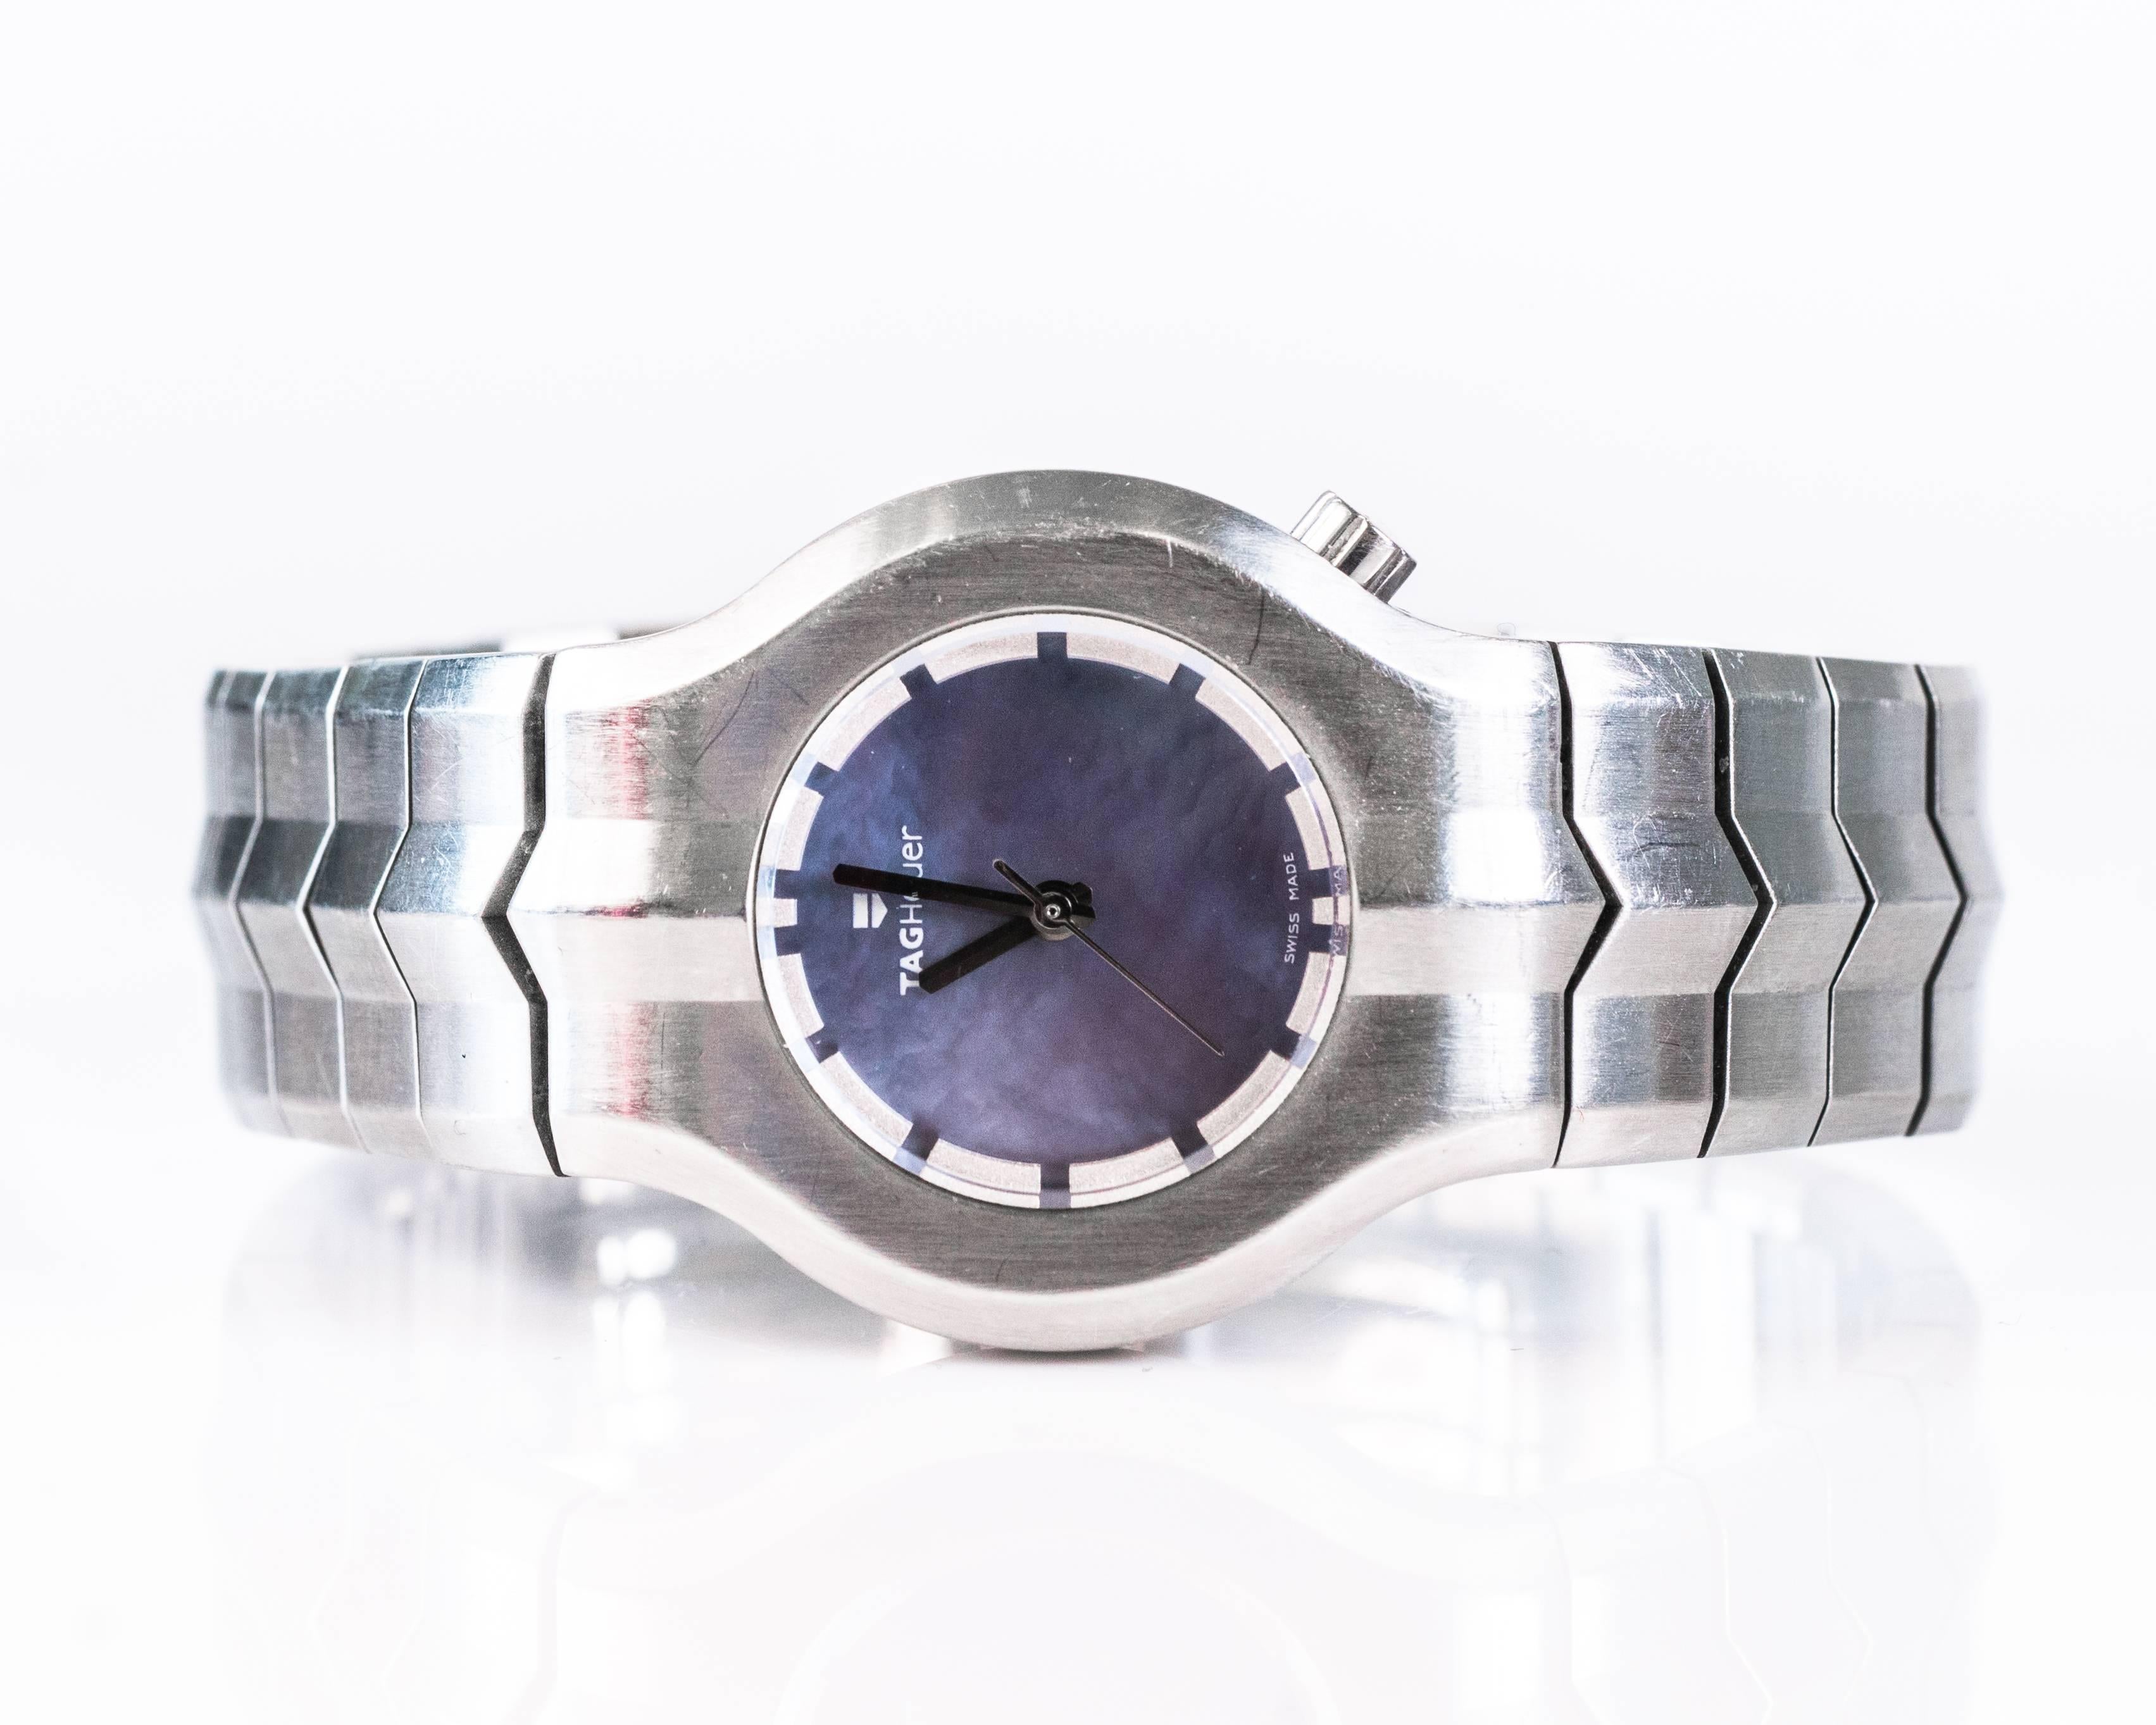 Modern TAG Heuer Alter Ego Stainless Steel Wristwatch